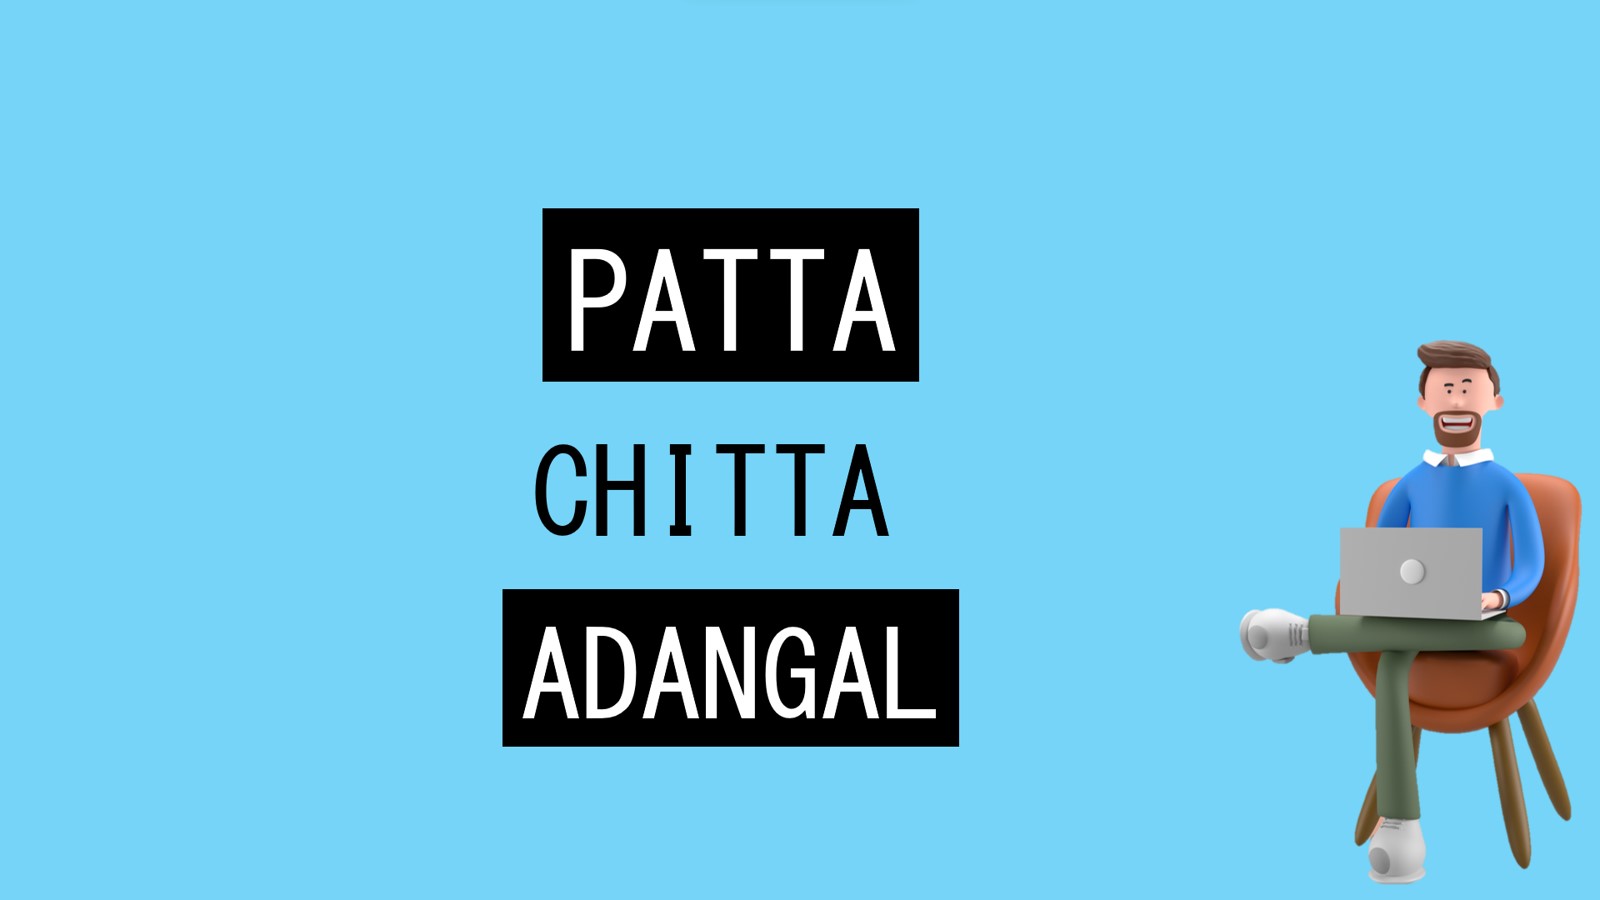 WHAT IS PATTA CHITTA